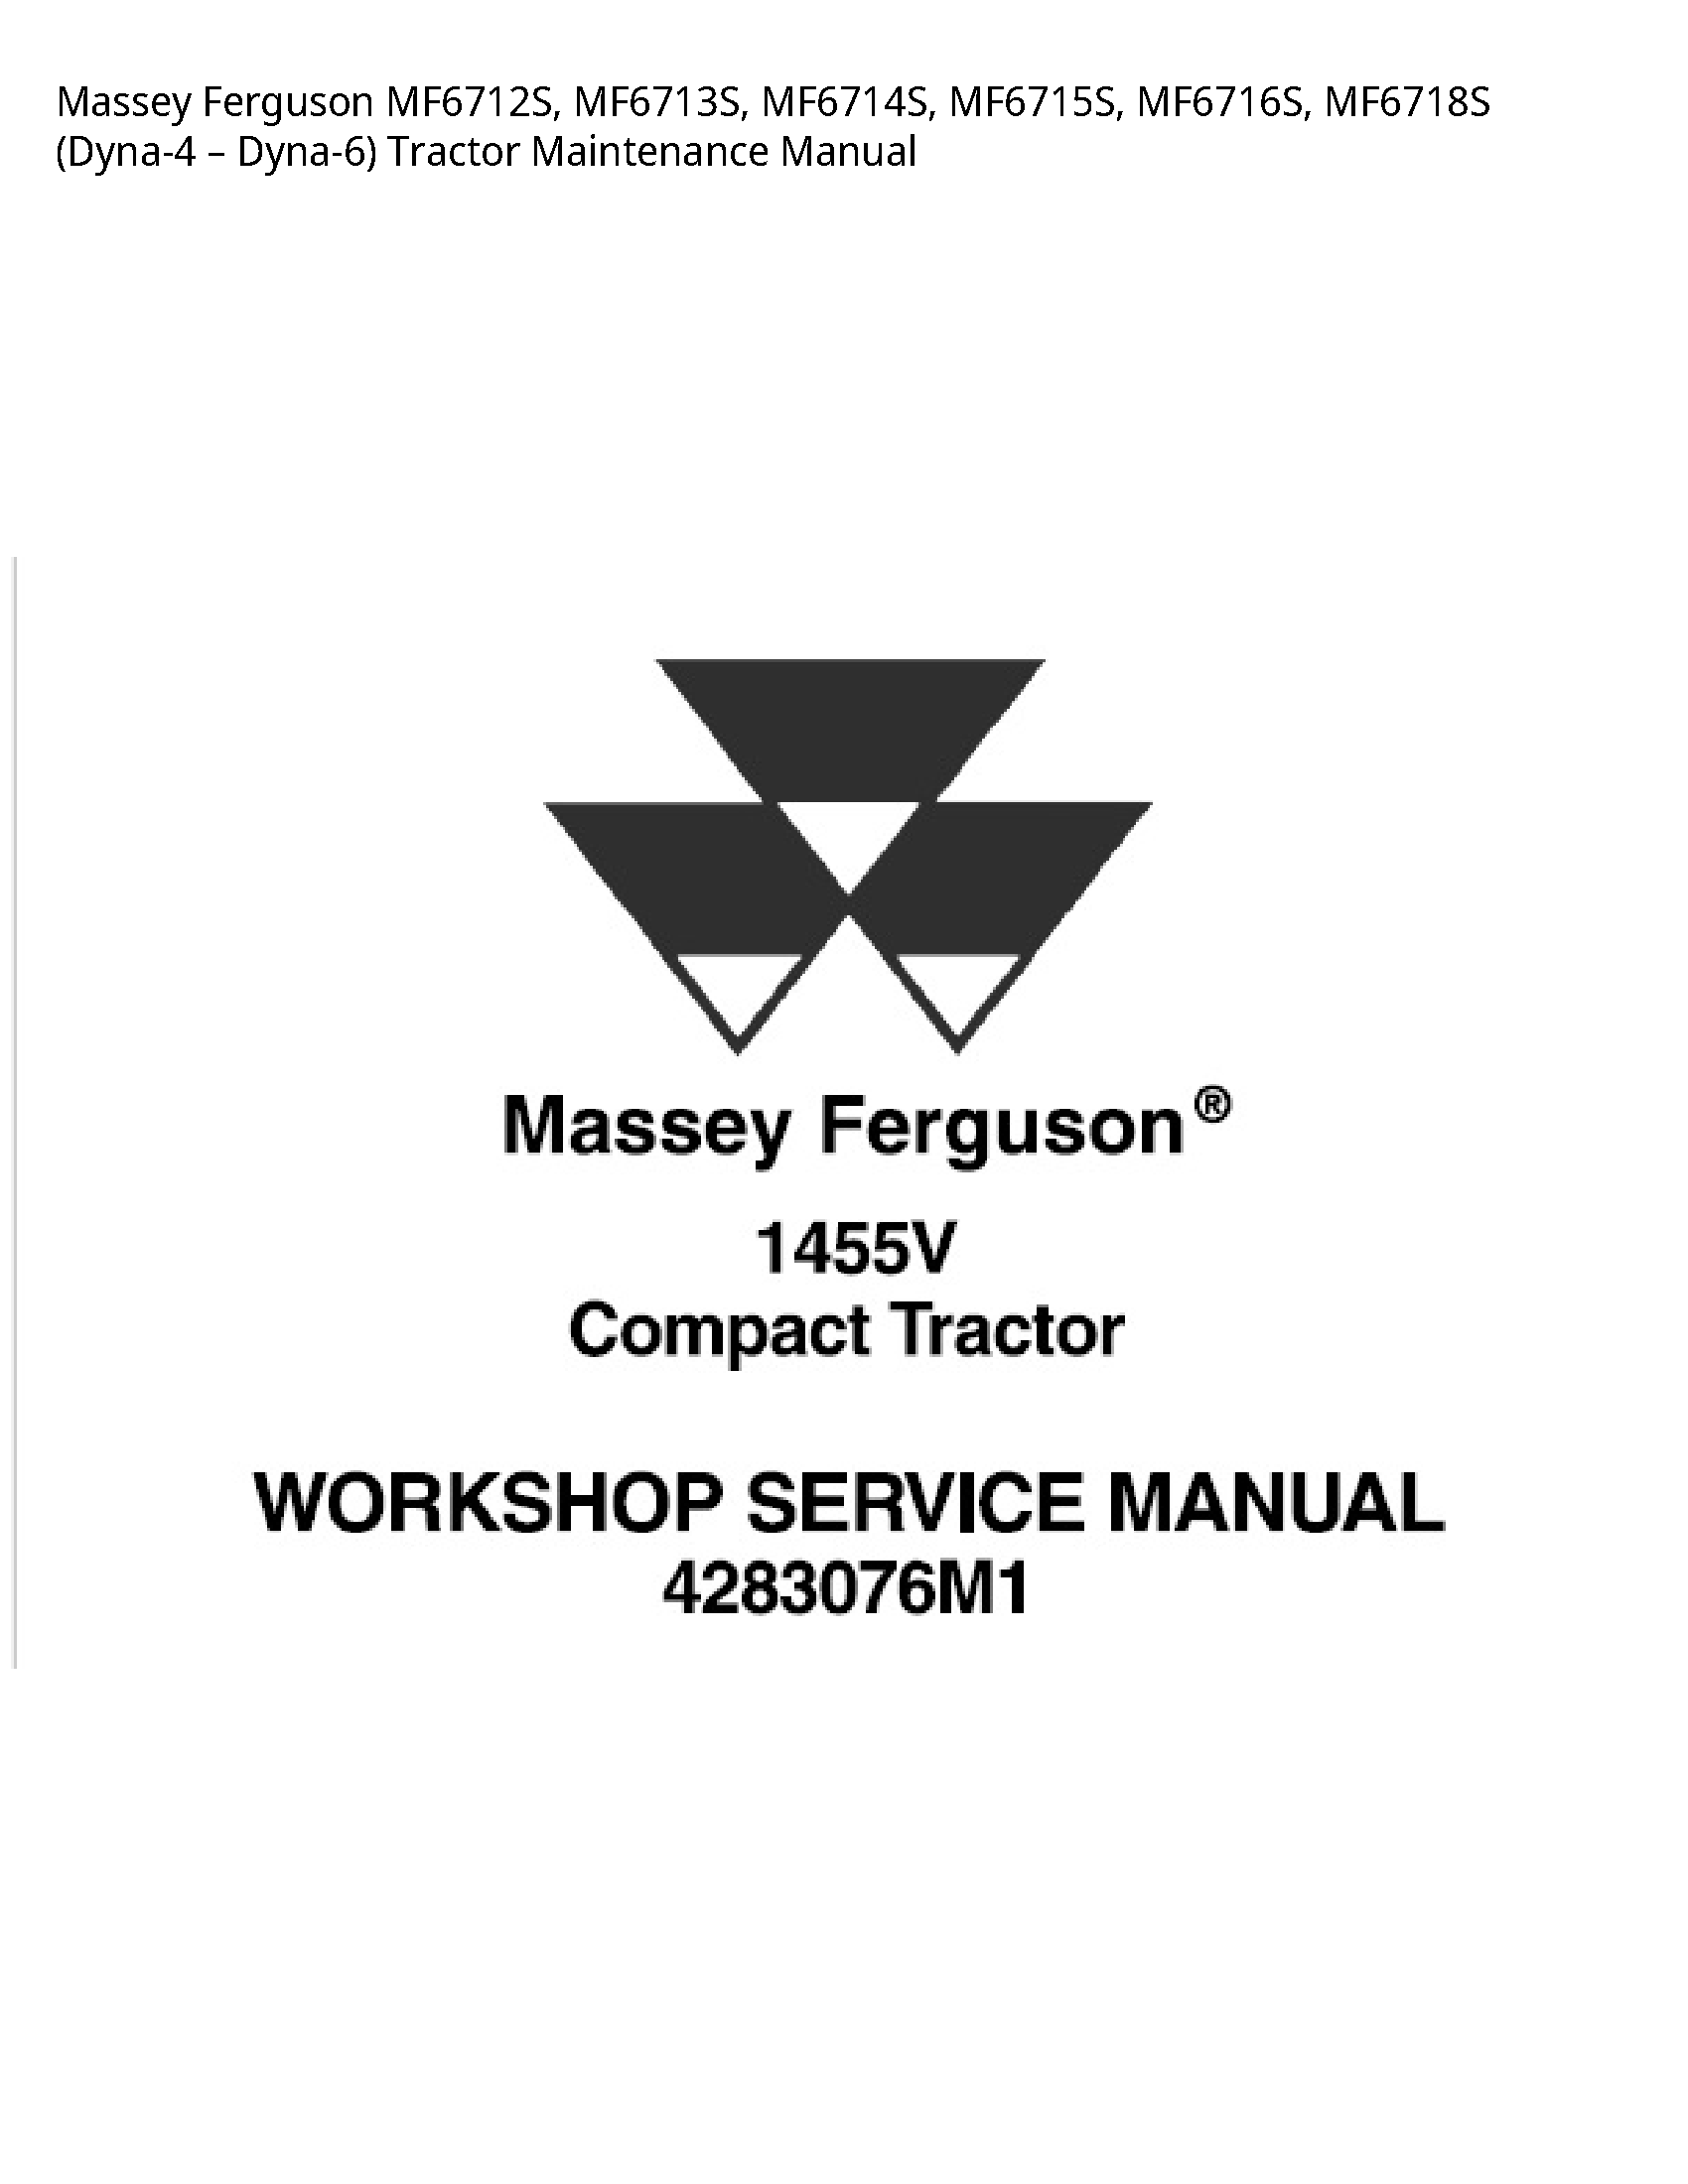 Massey Ferguson MF6712S Tractor Maintenance manual